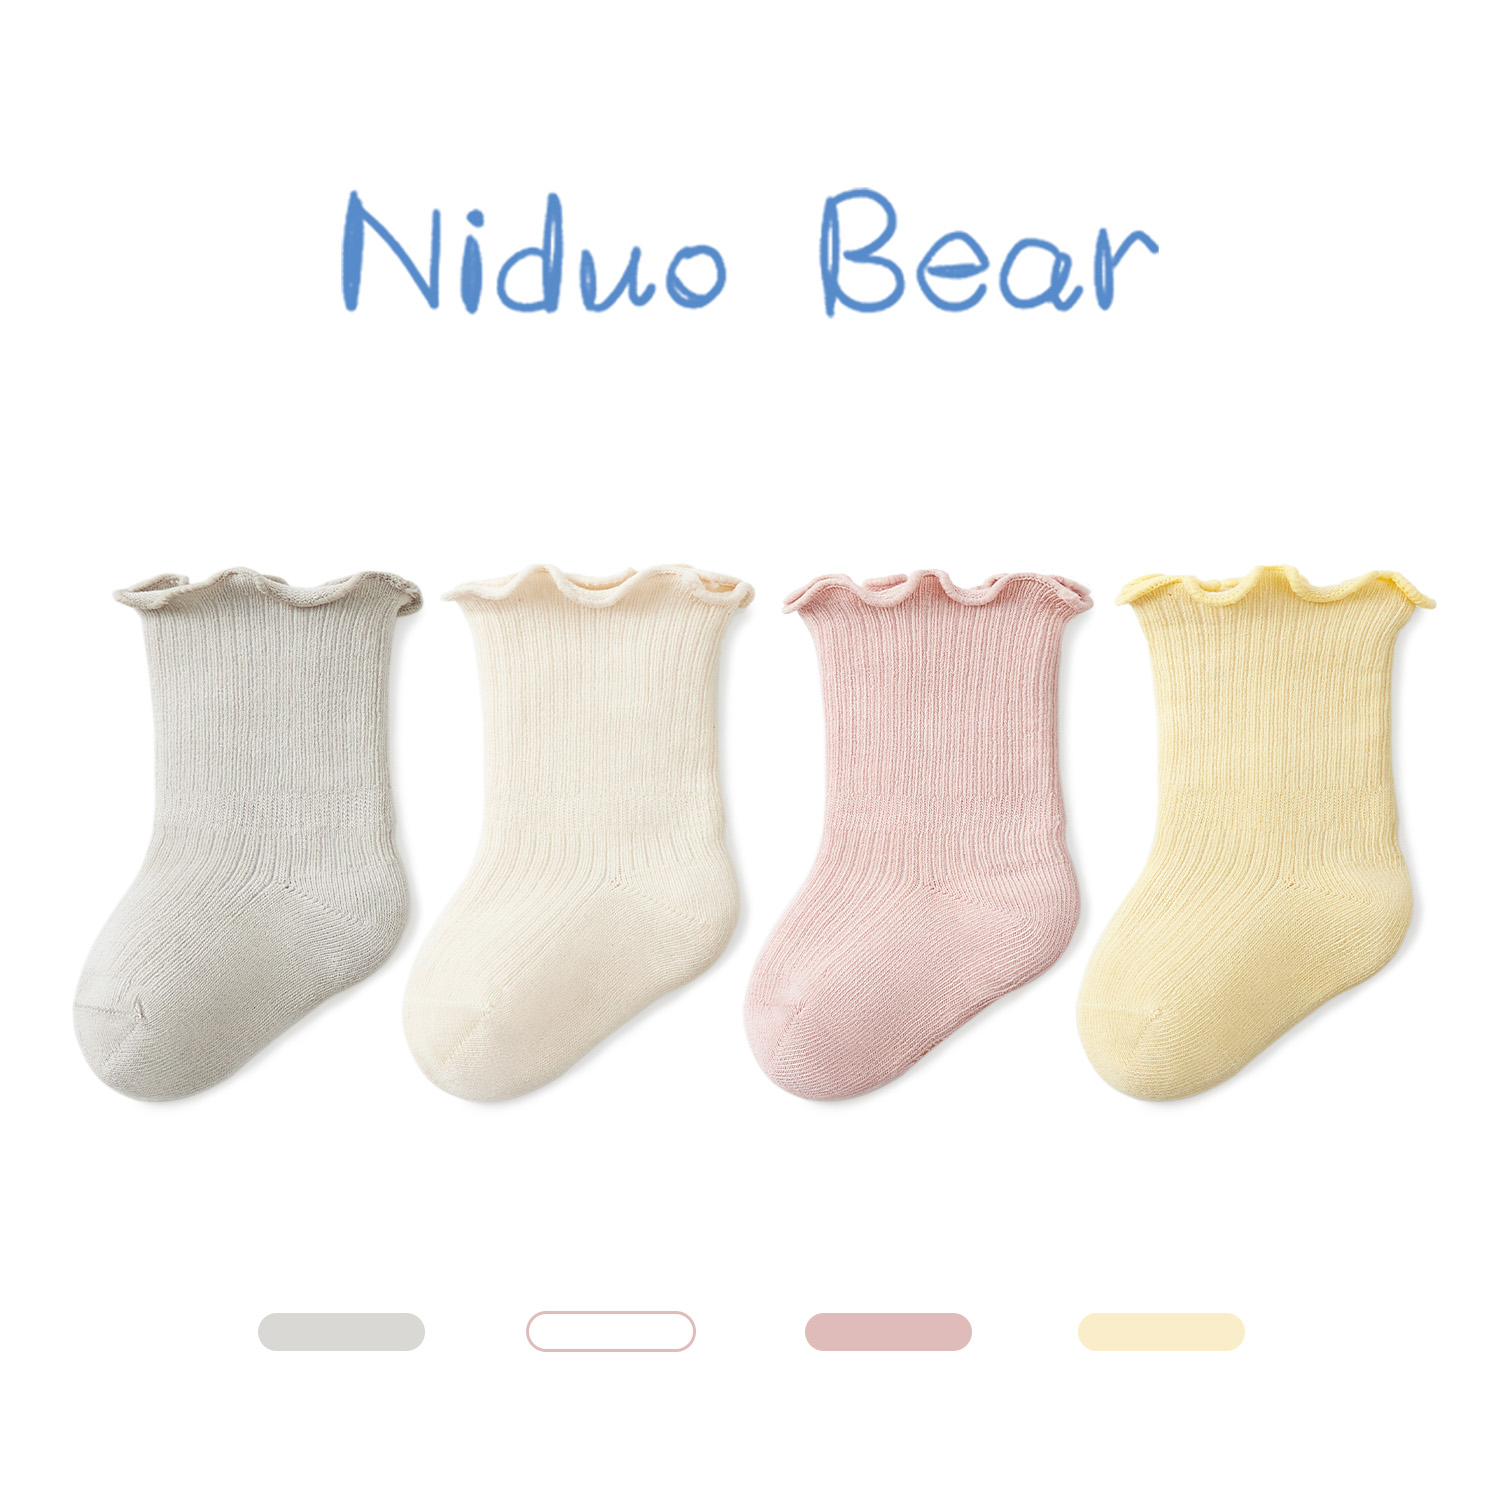 Nido Bear ベビーソックス春と秋の綿の靴下骨のない女性の赤ちゃんミッドふくらはぎ靴下緩い口 0-1 歳の新生児靴下秋と冬